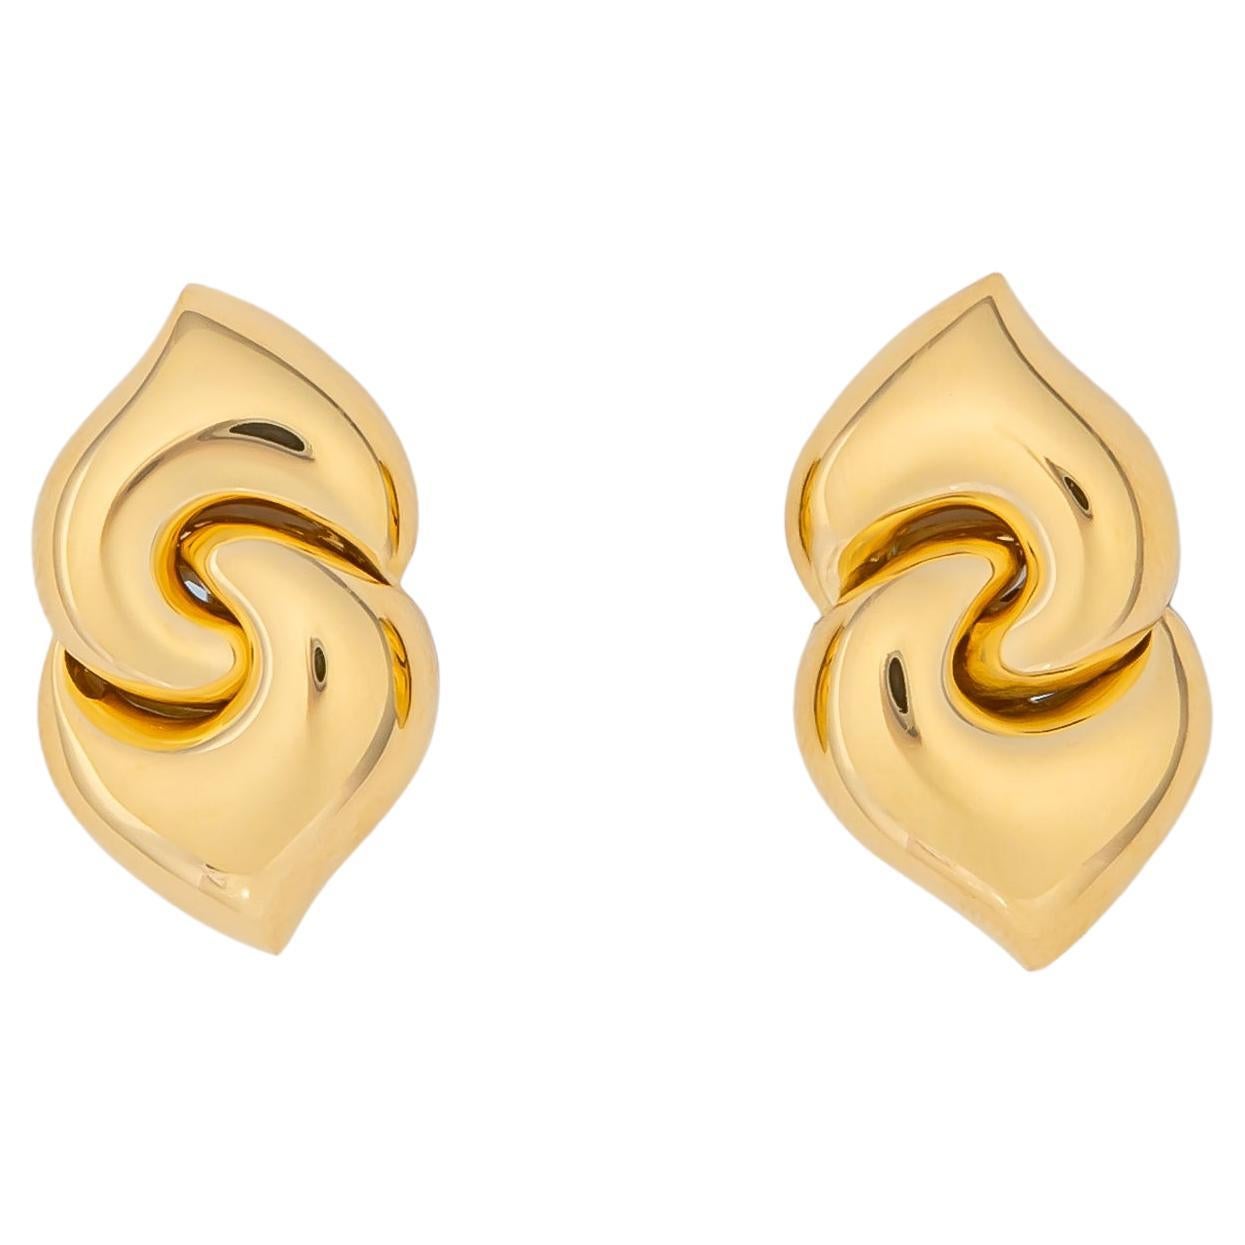 Bvlgari Dopplo Cuore Gold Earrings